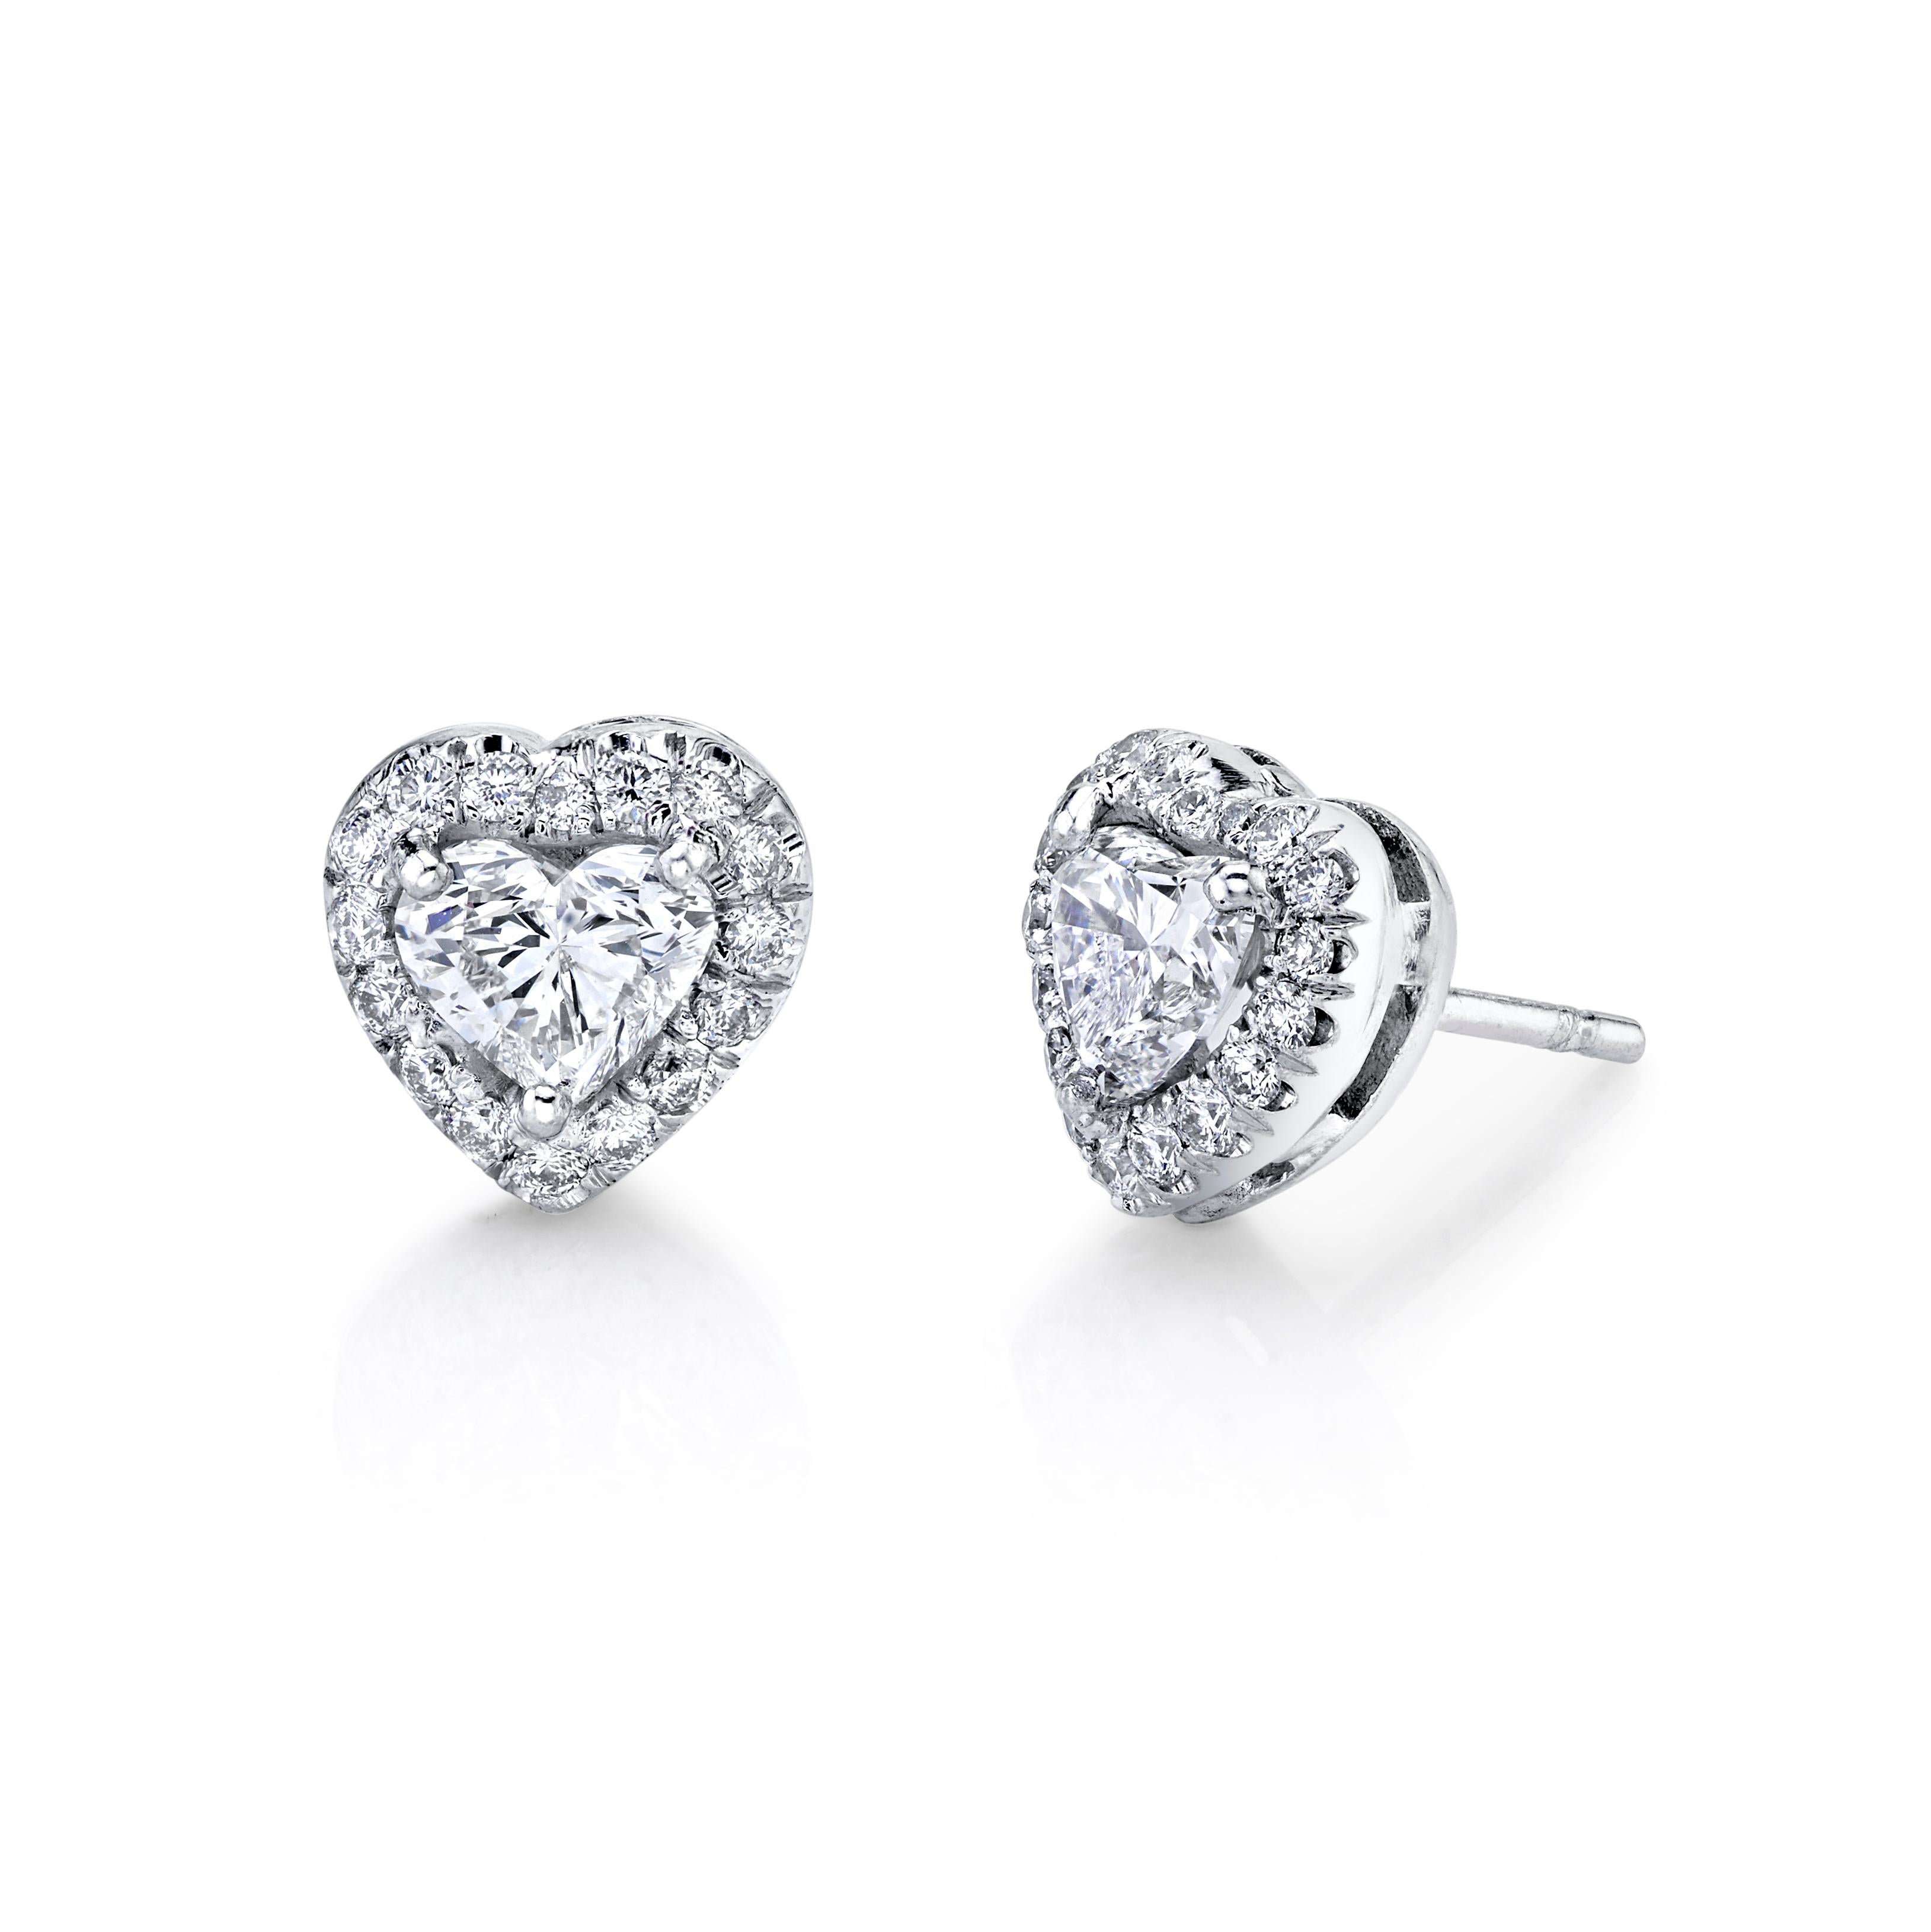 Heart Shape Diamond Earrings and Pendant Set 2.79 carats Platinum/18KWG

Spectacular. Set in Platinum/18KWG

EARRINGS:

Heart Shape weighs 0.50 carats 

F Color VS2 Clarity GIA Certificate #5336840706

Heart Shape weighs 0.54 carats 

E Color VS2